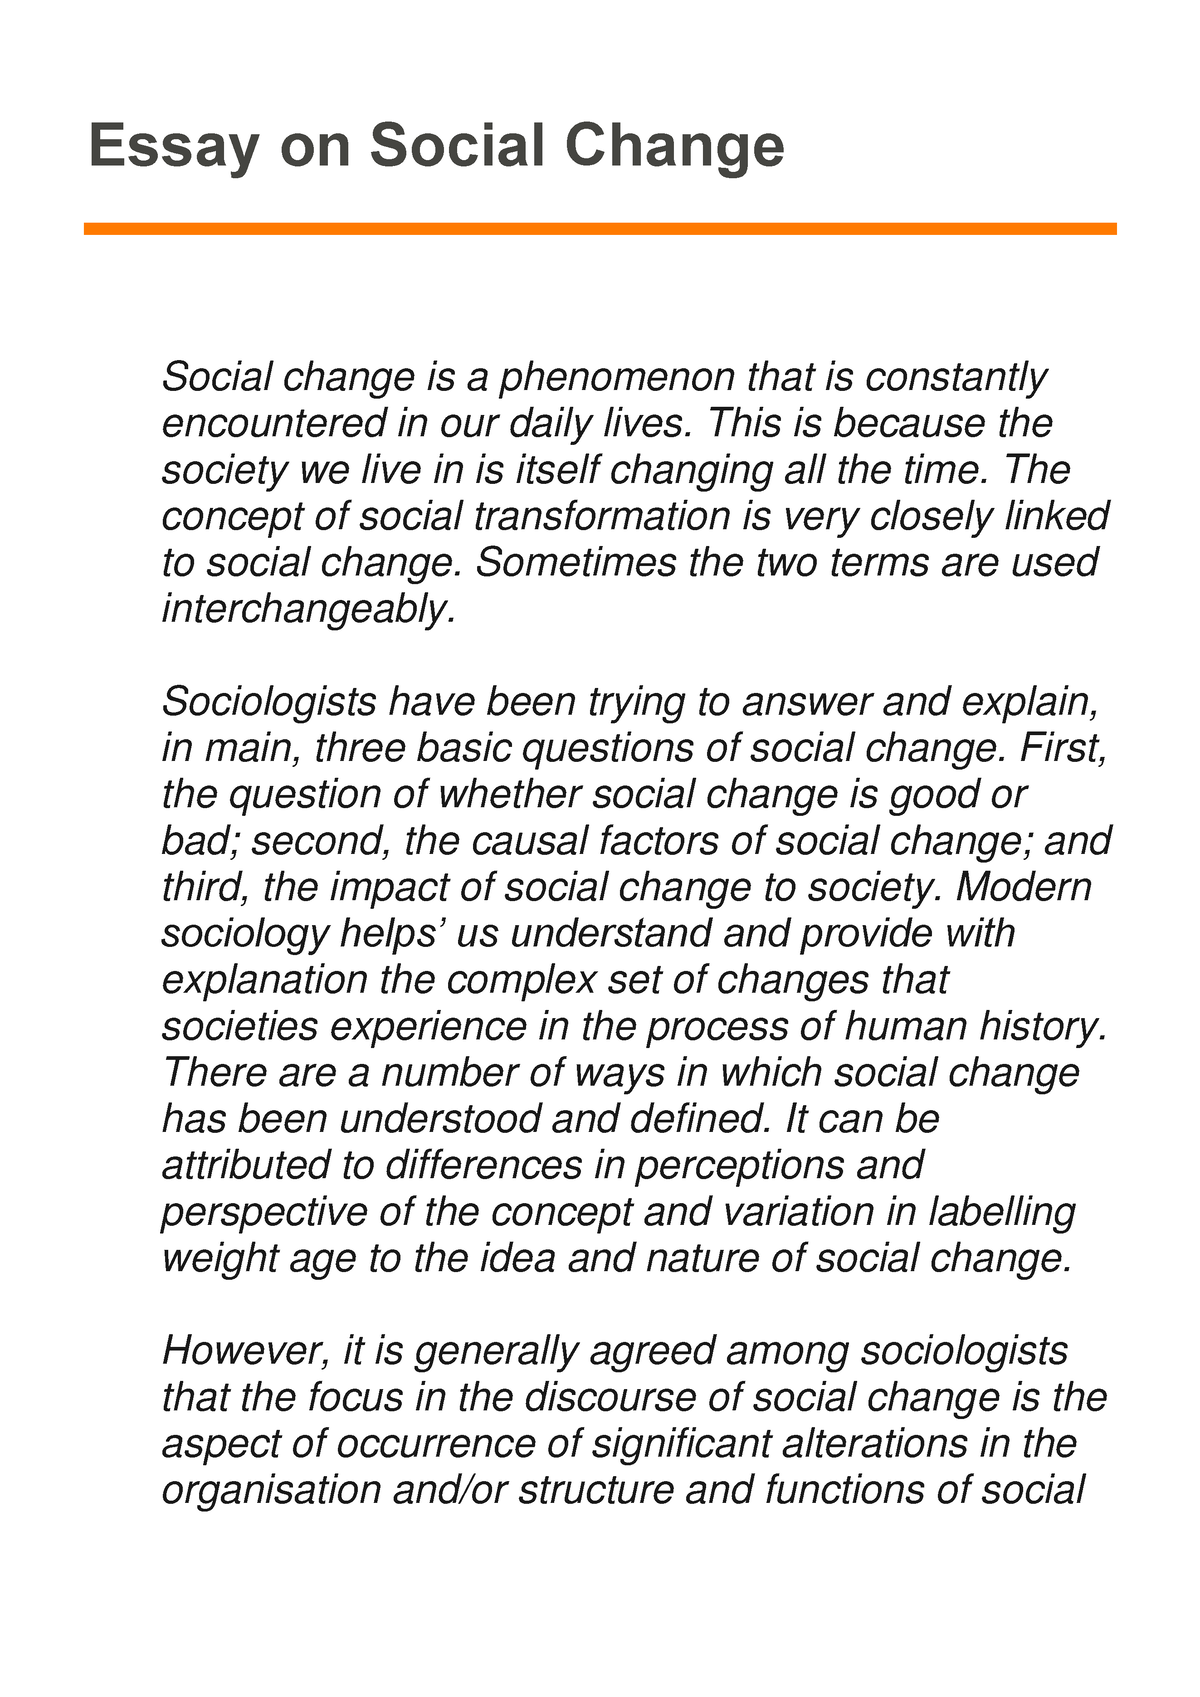 social change essay ideas